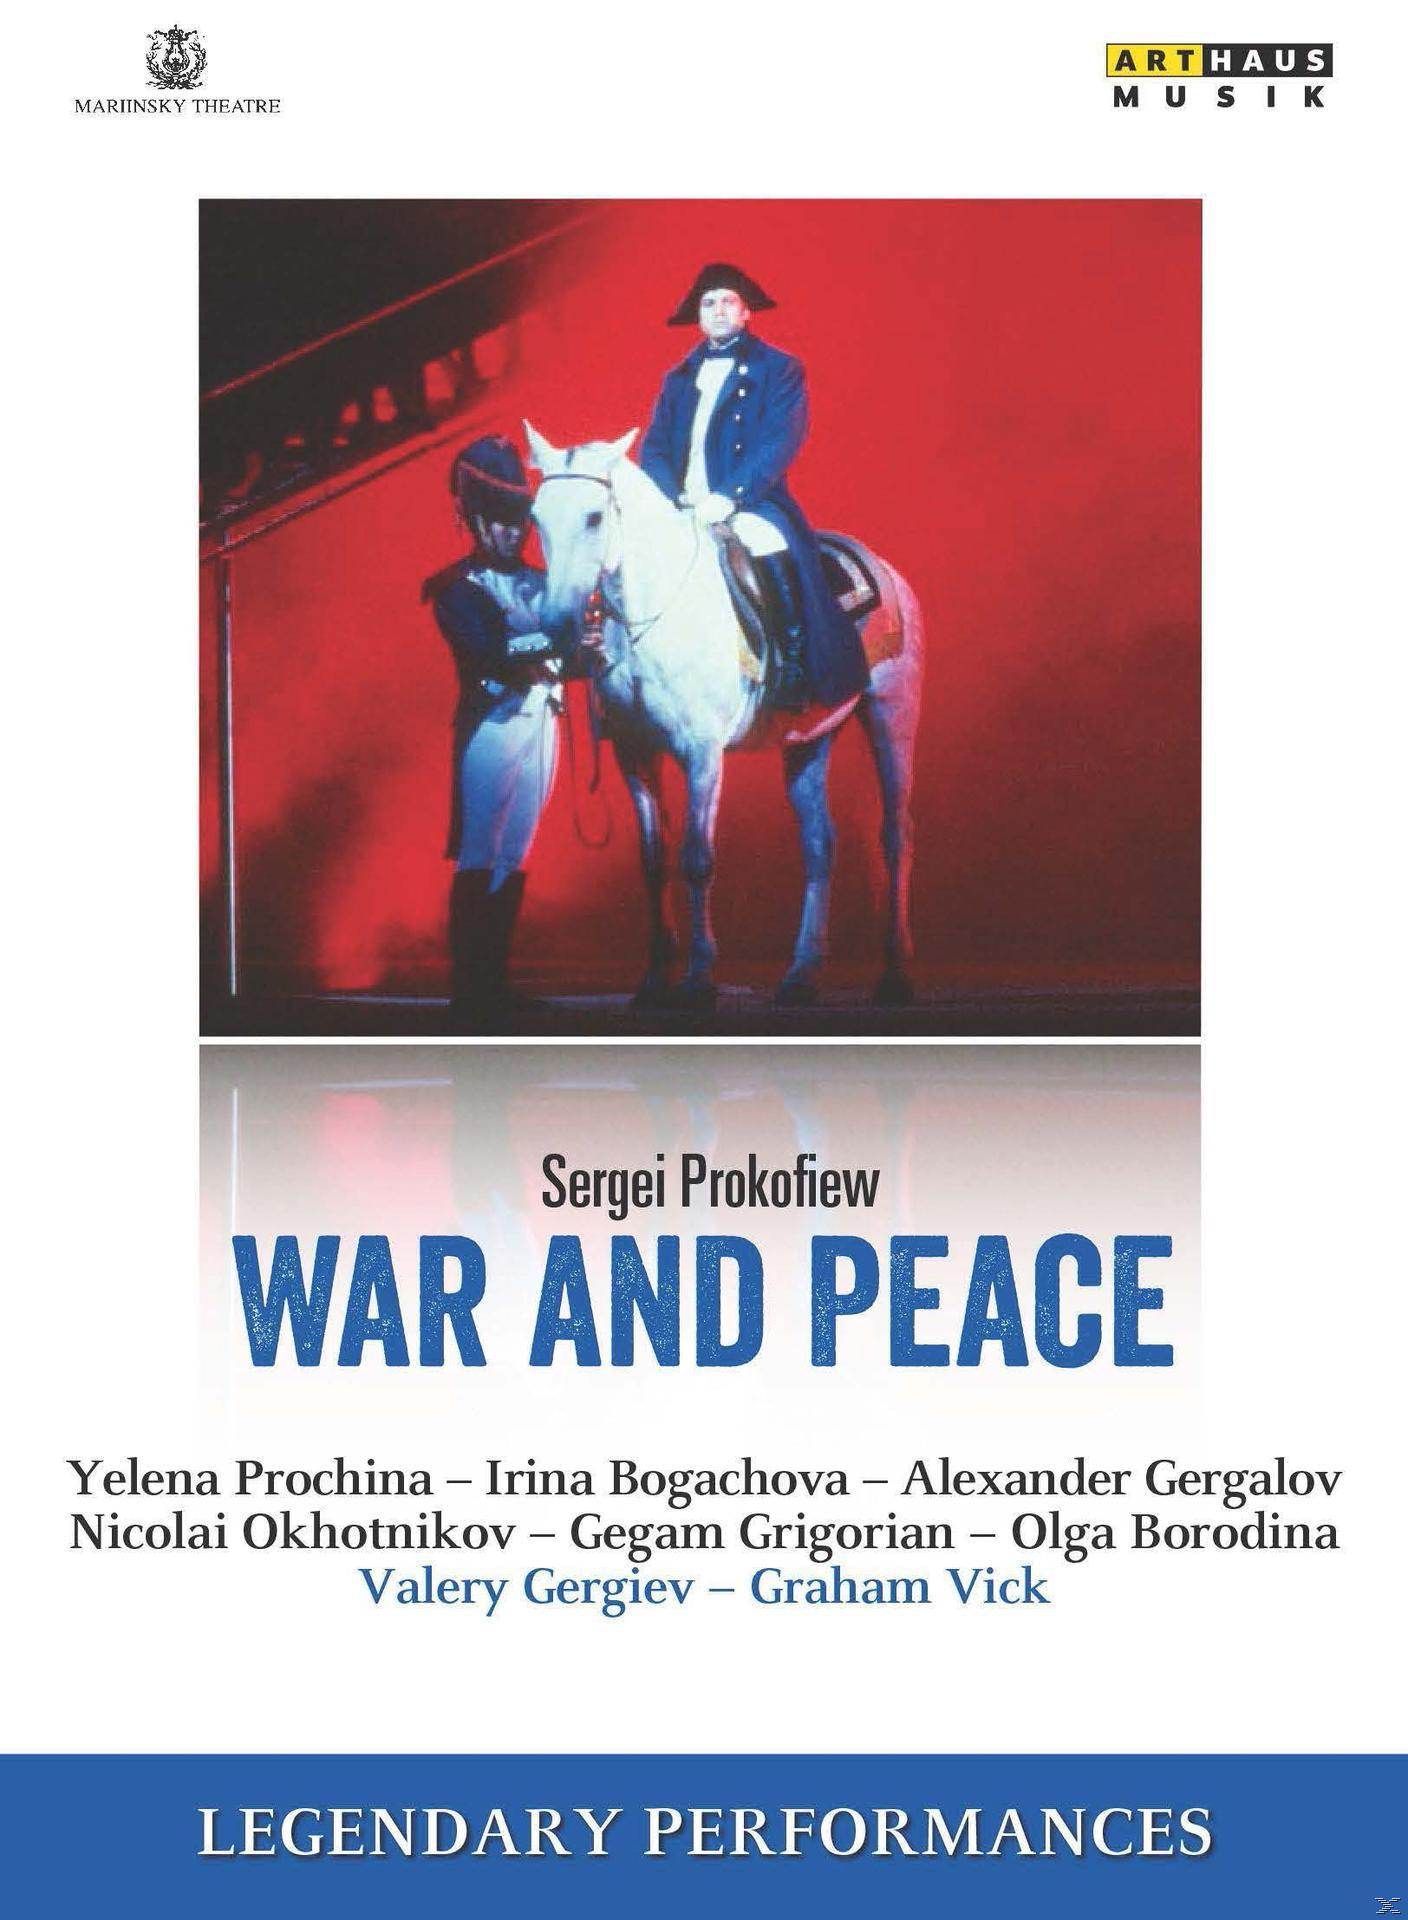 Vassily Und Gergalov, Prokina, Krieg Kirov Orchestra Elena - (DVD) Grigorian, Gegam Gerelo, Frieden Olga Alexander Borodina, -